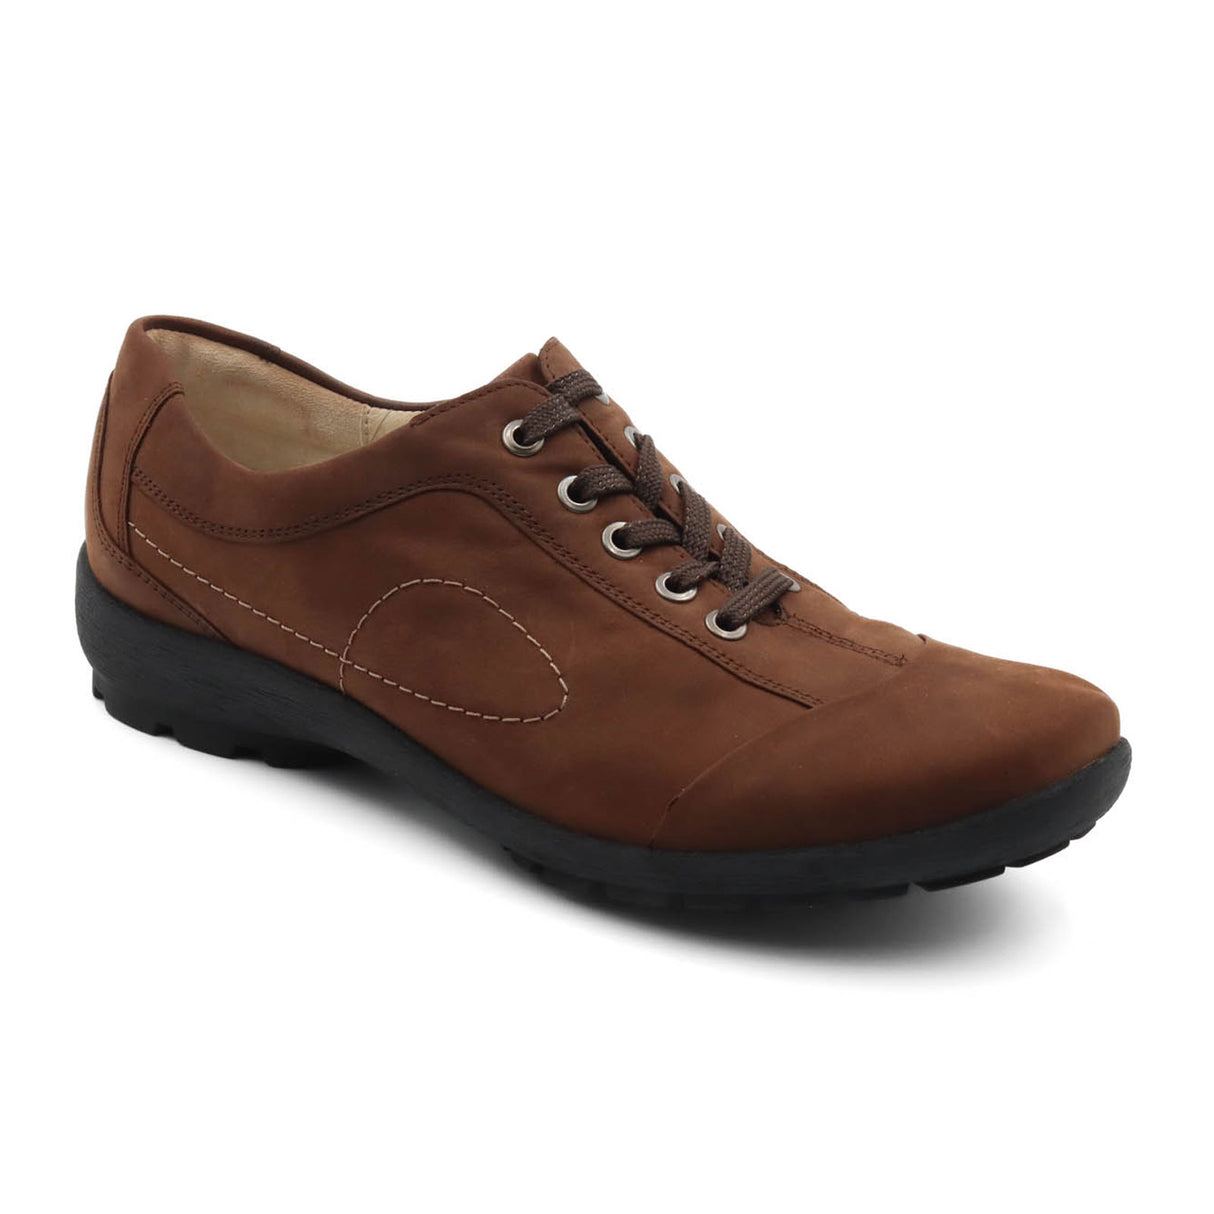 Waldlaufer Dana 589008 Lace Up (Women) - Brown Dress-Casual - Lace Ups - The Heel Shoe Fitters